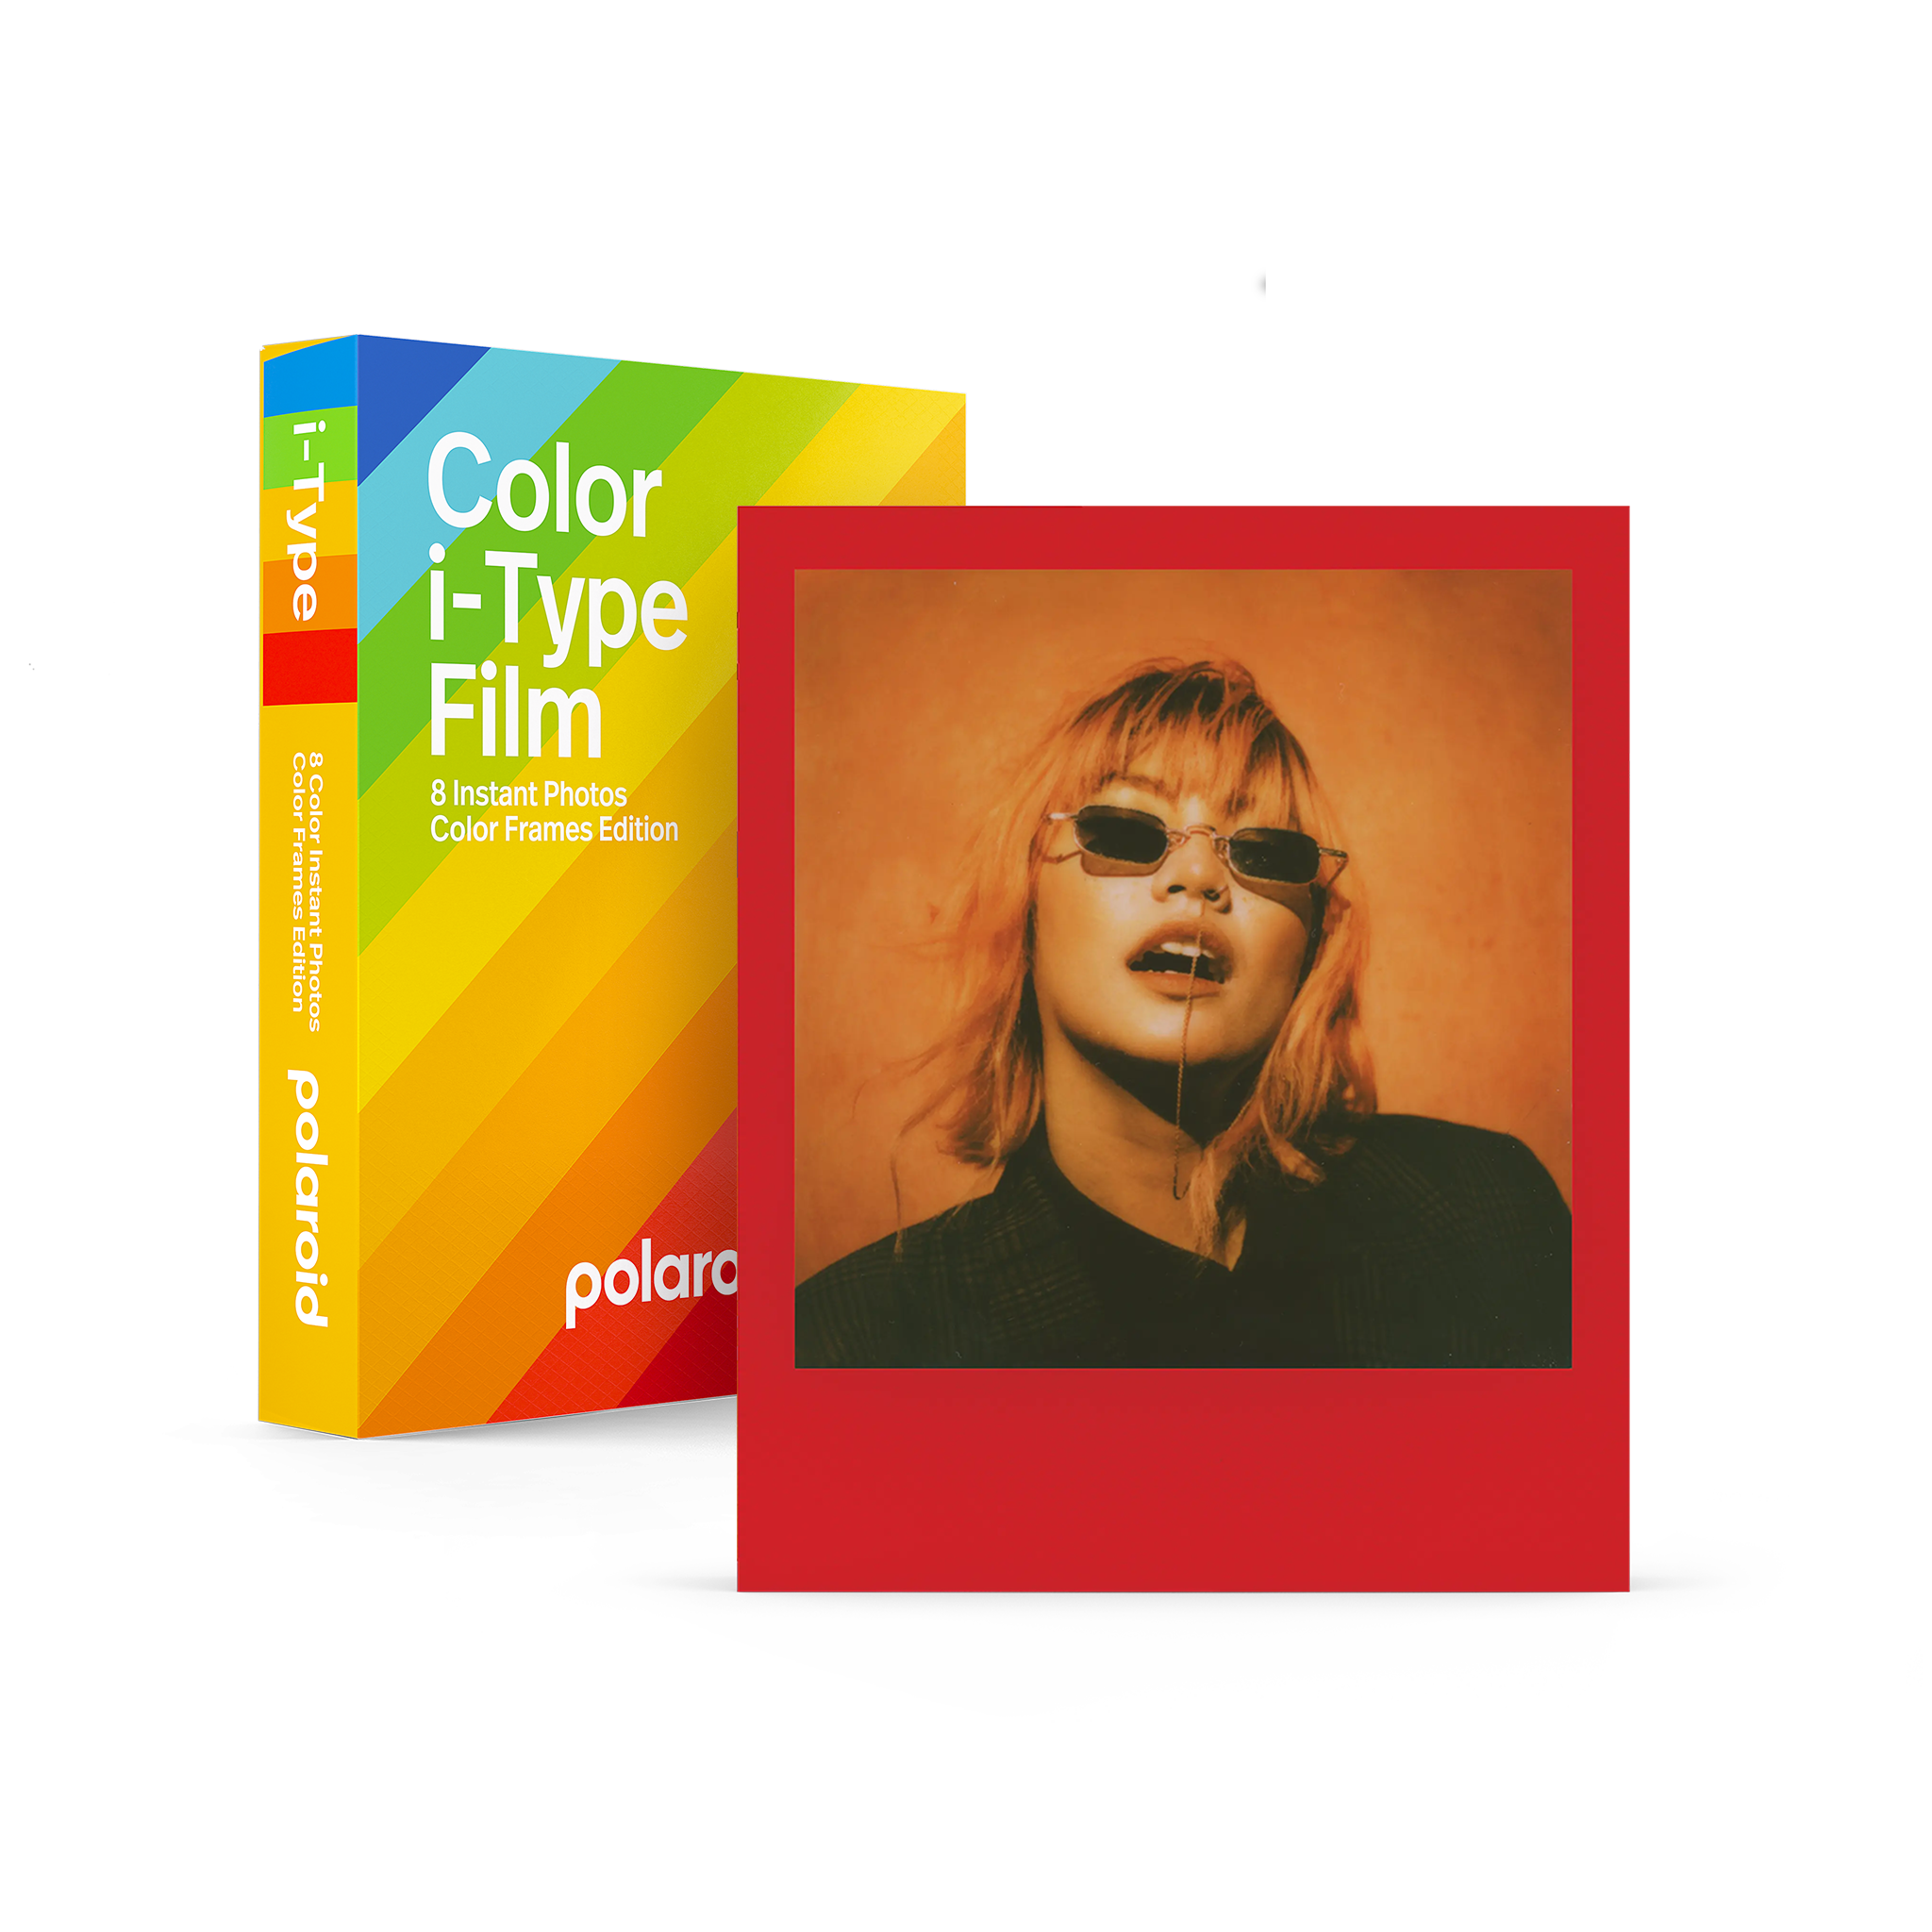 Cartuchos para cámara Polaroid Color Film I-Type Black Frame Edition